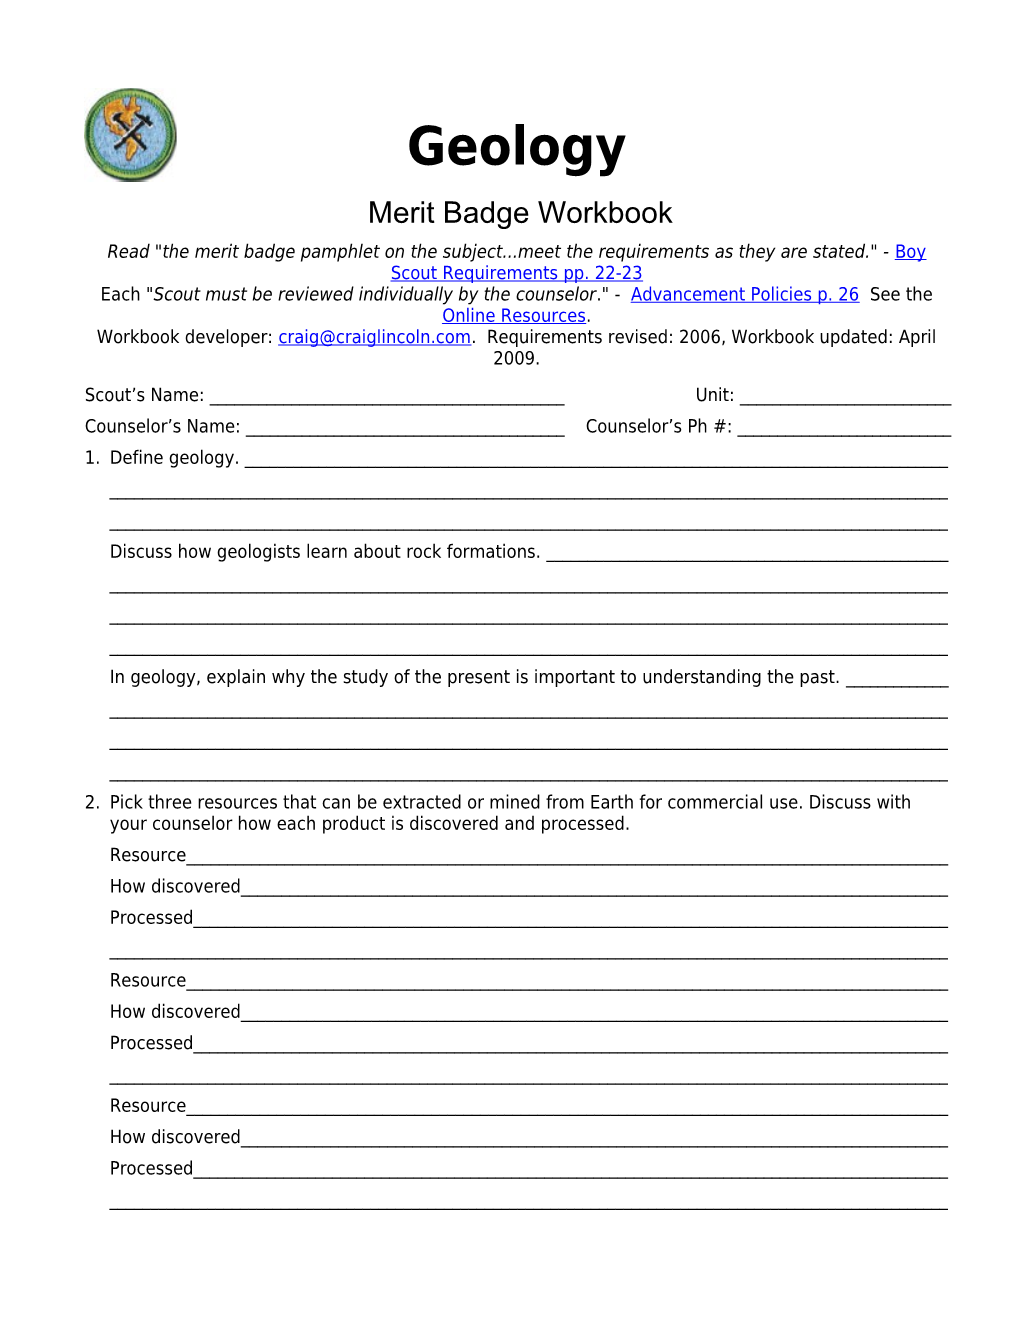 Geology P. 5 Merit Badge Workbook Scout's Name: ______